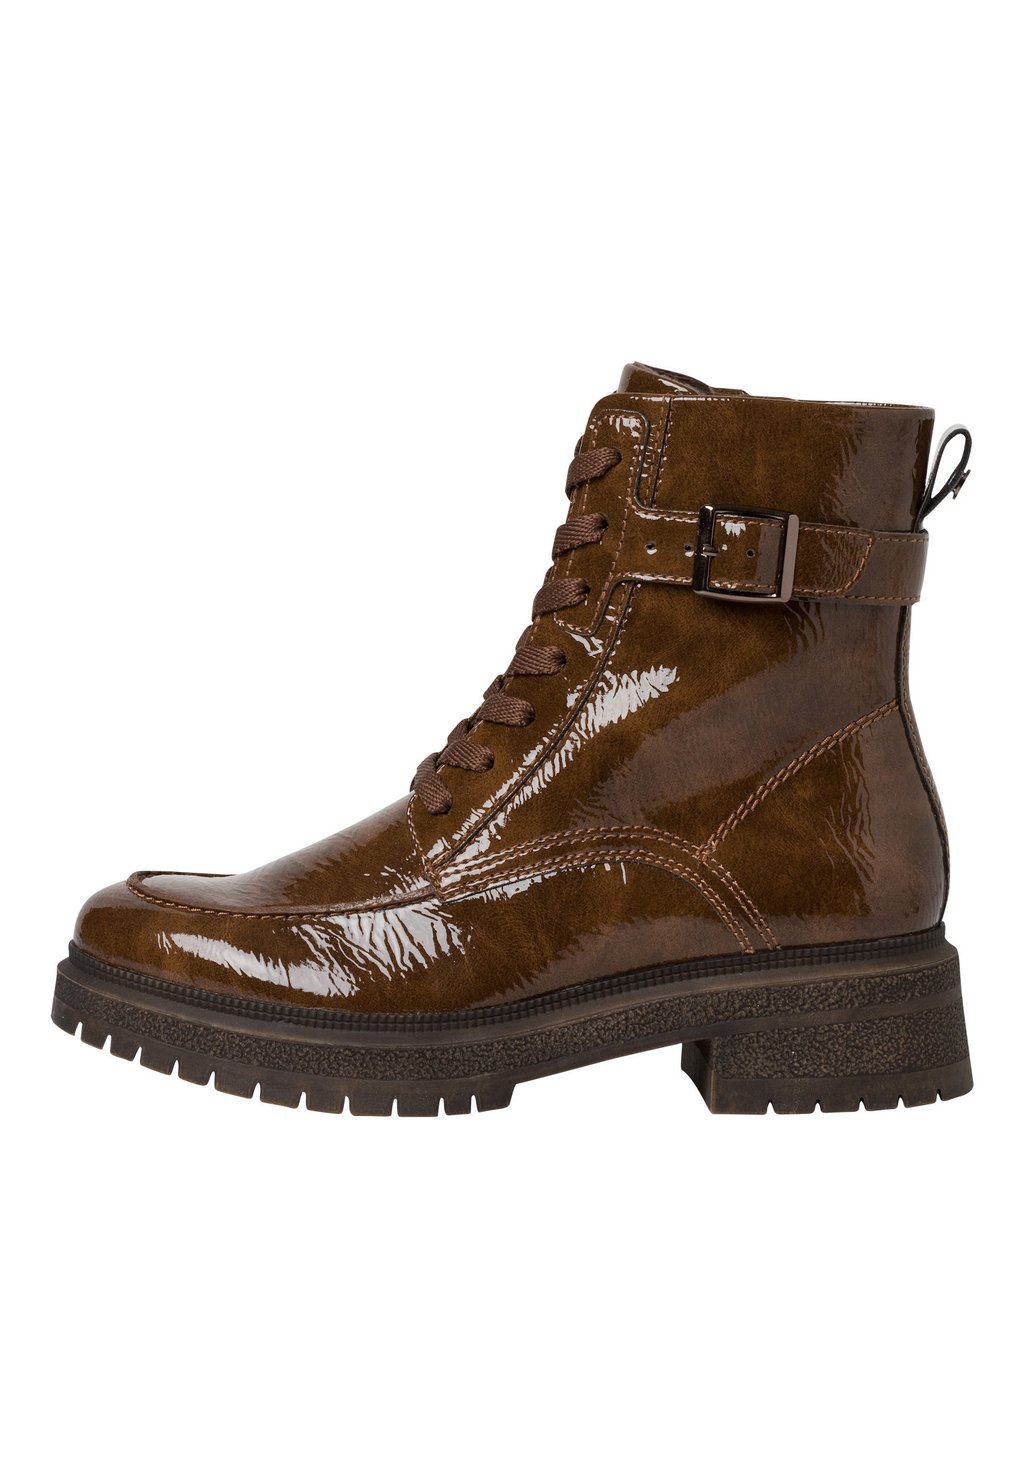 Ботинки на шнуровке Tamaris, коричневый ботинки на шнурках женские tamaris коричневый комб 38